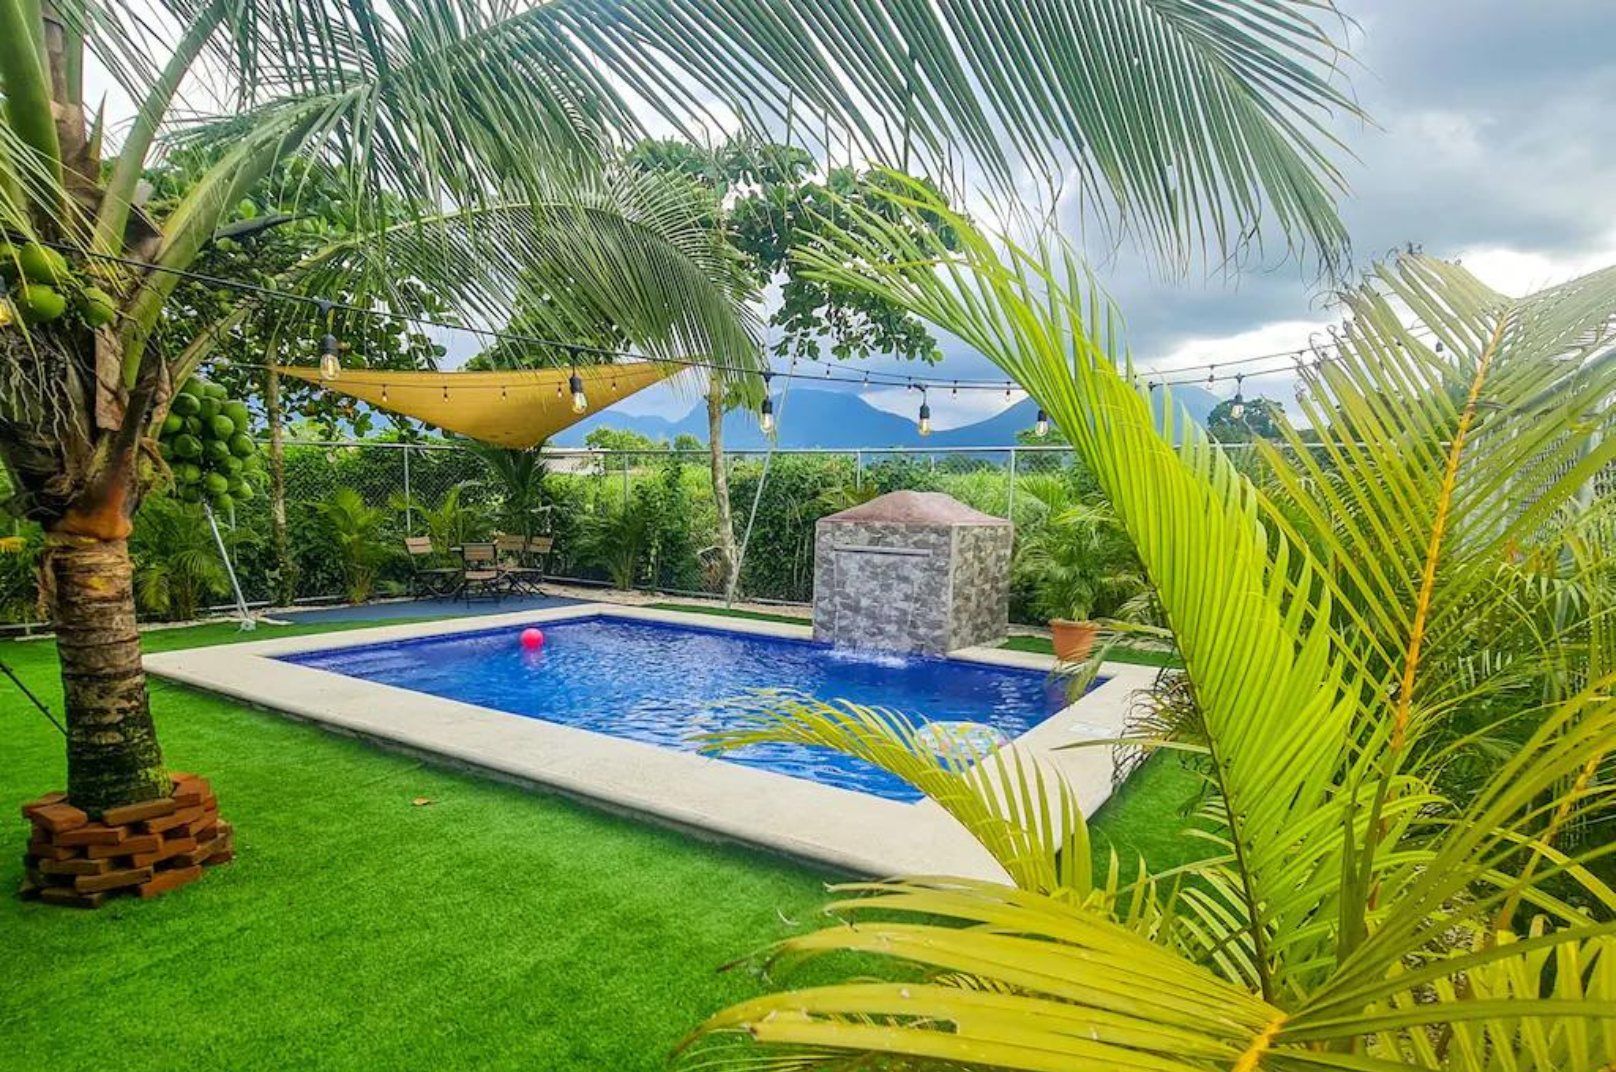 Lake Arenal, Costa Rica vacation rentals